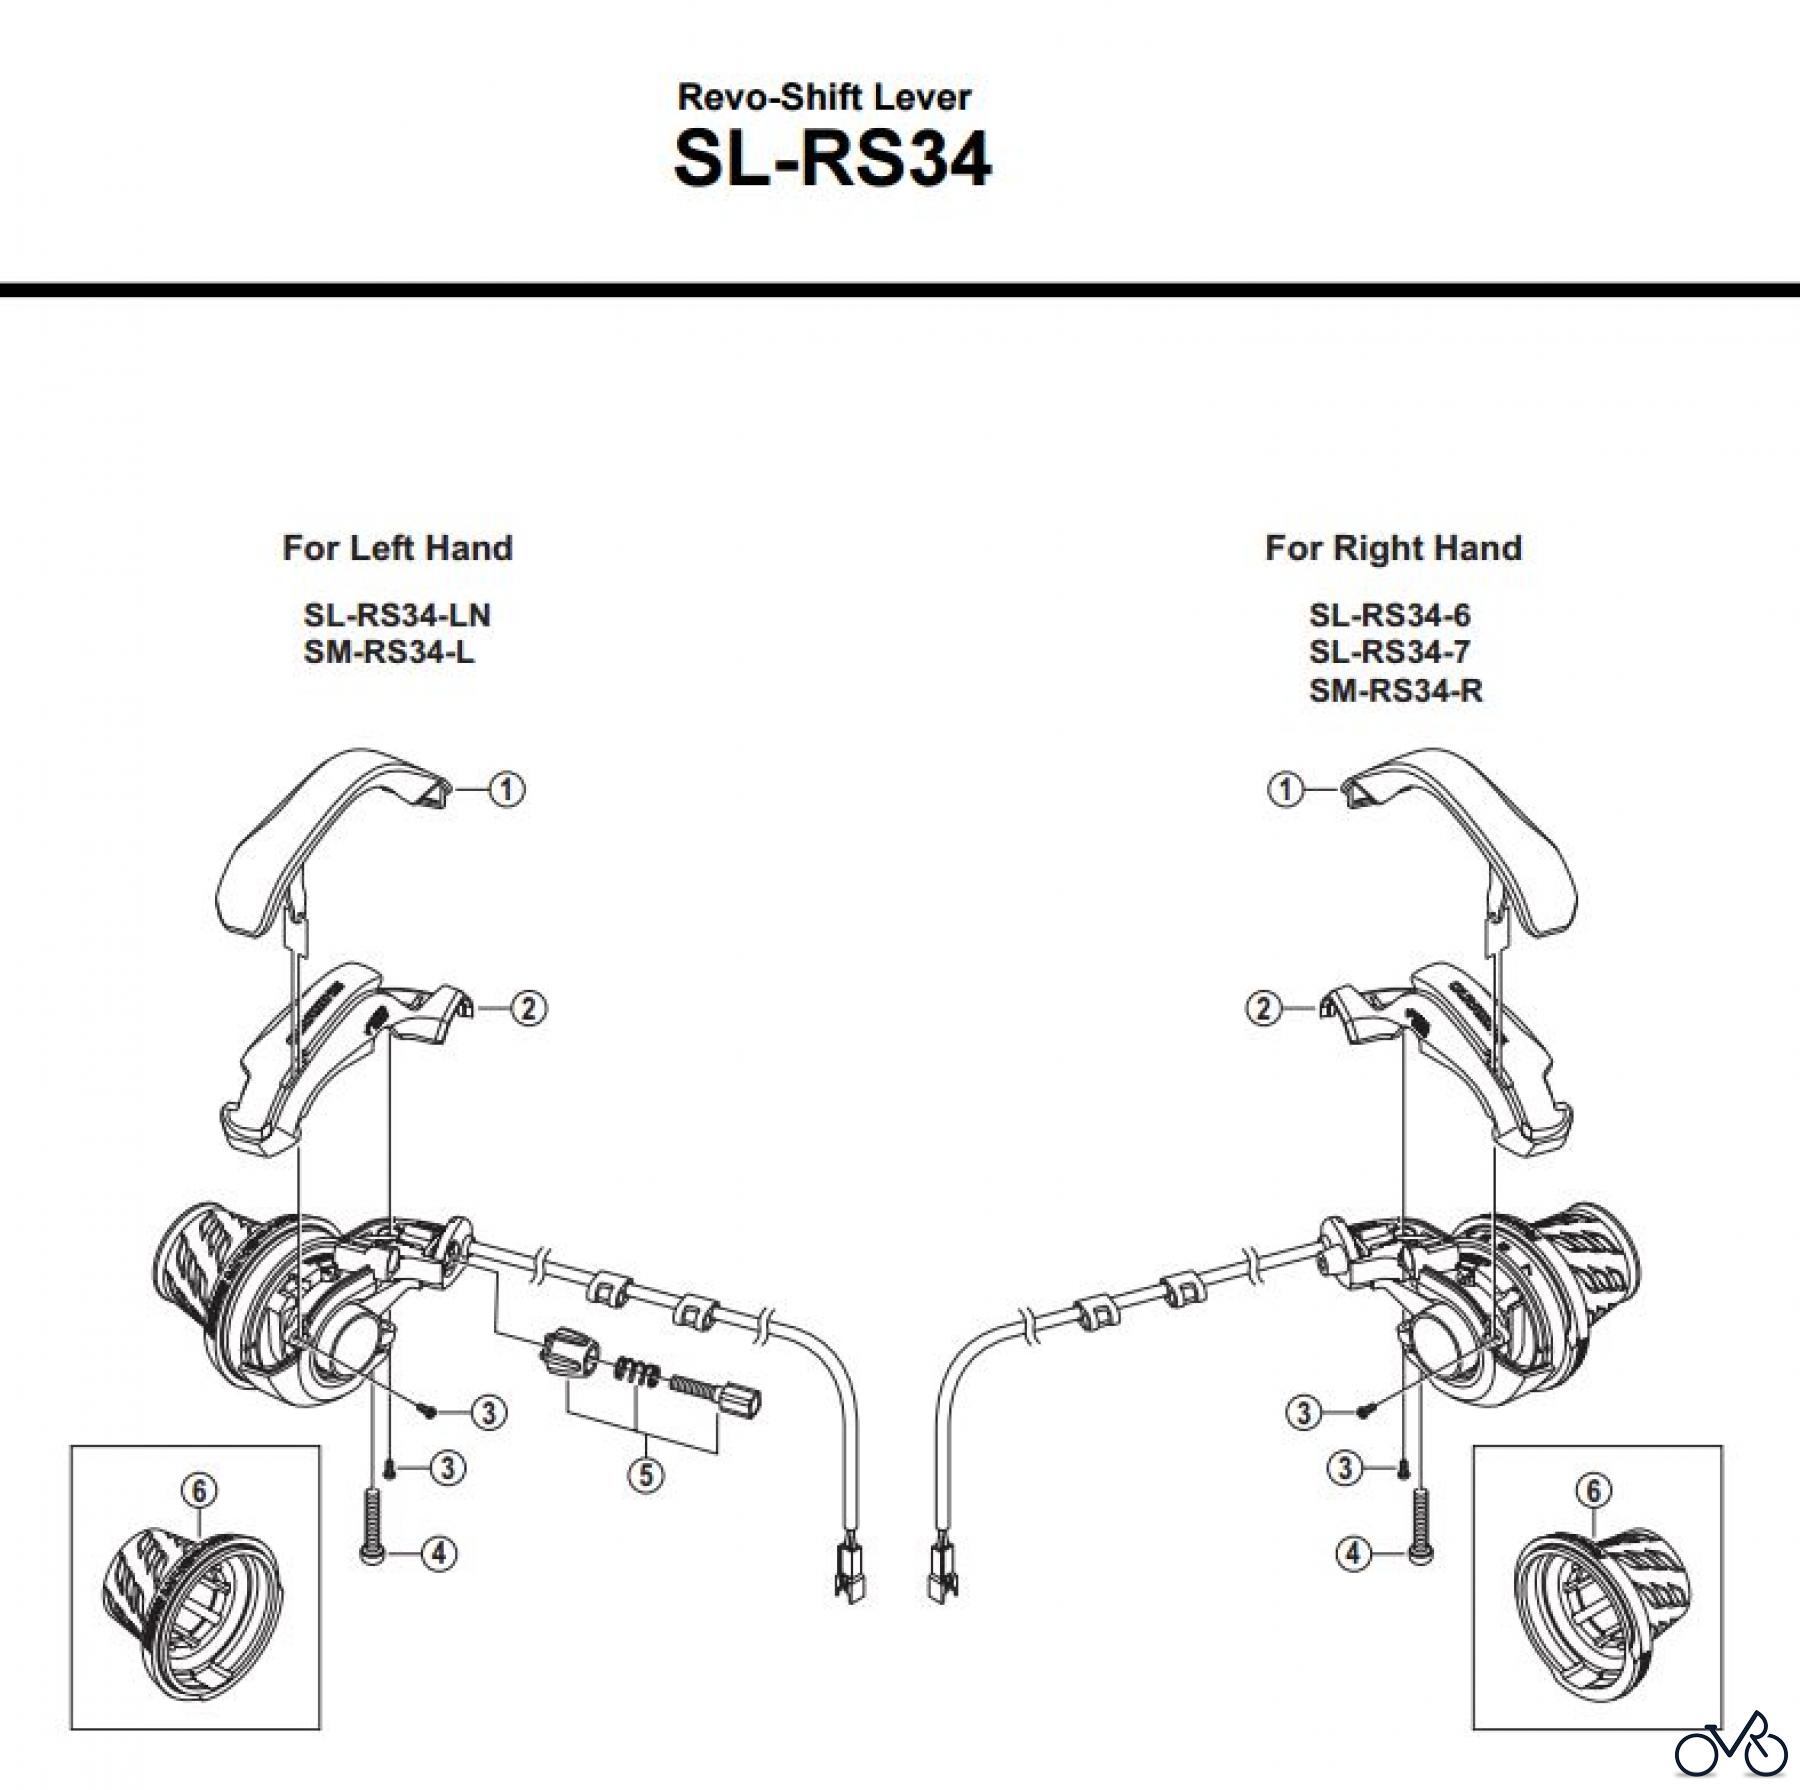  Shimano SL Shift Lever - Schalthebel SL-RS34 -3468 Revo-Shift Lever